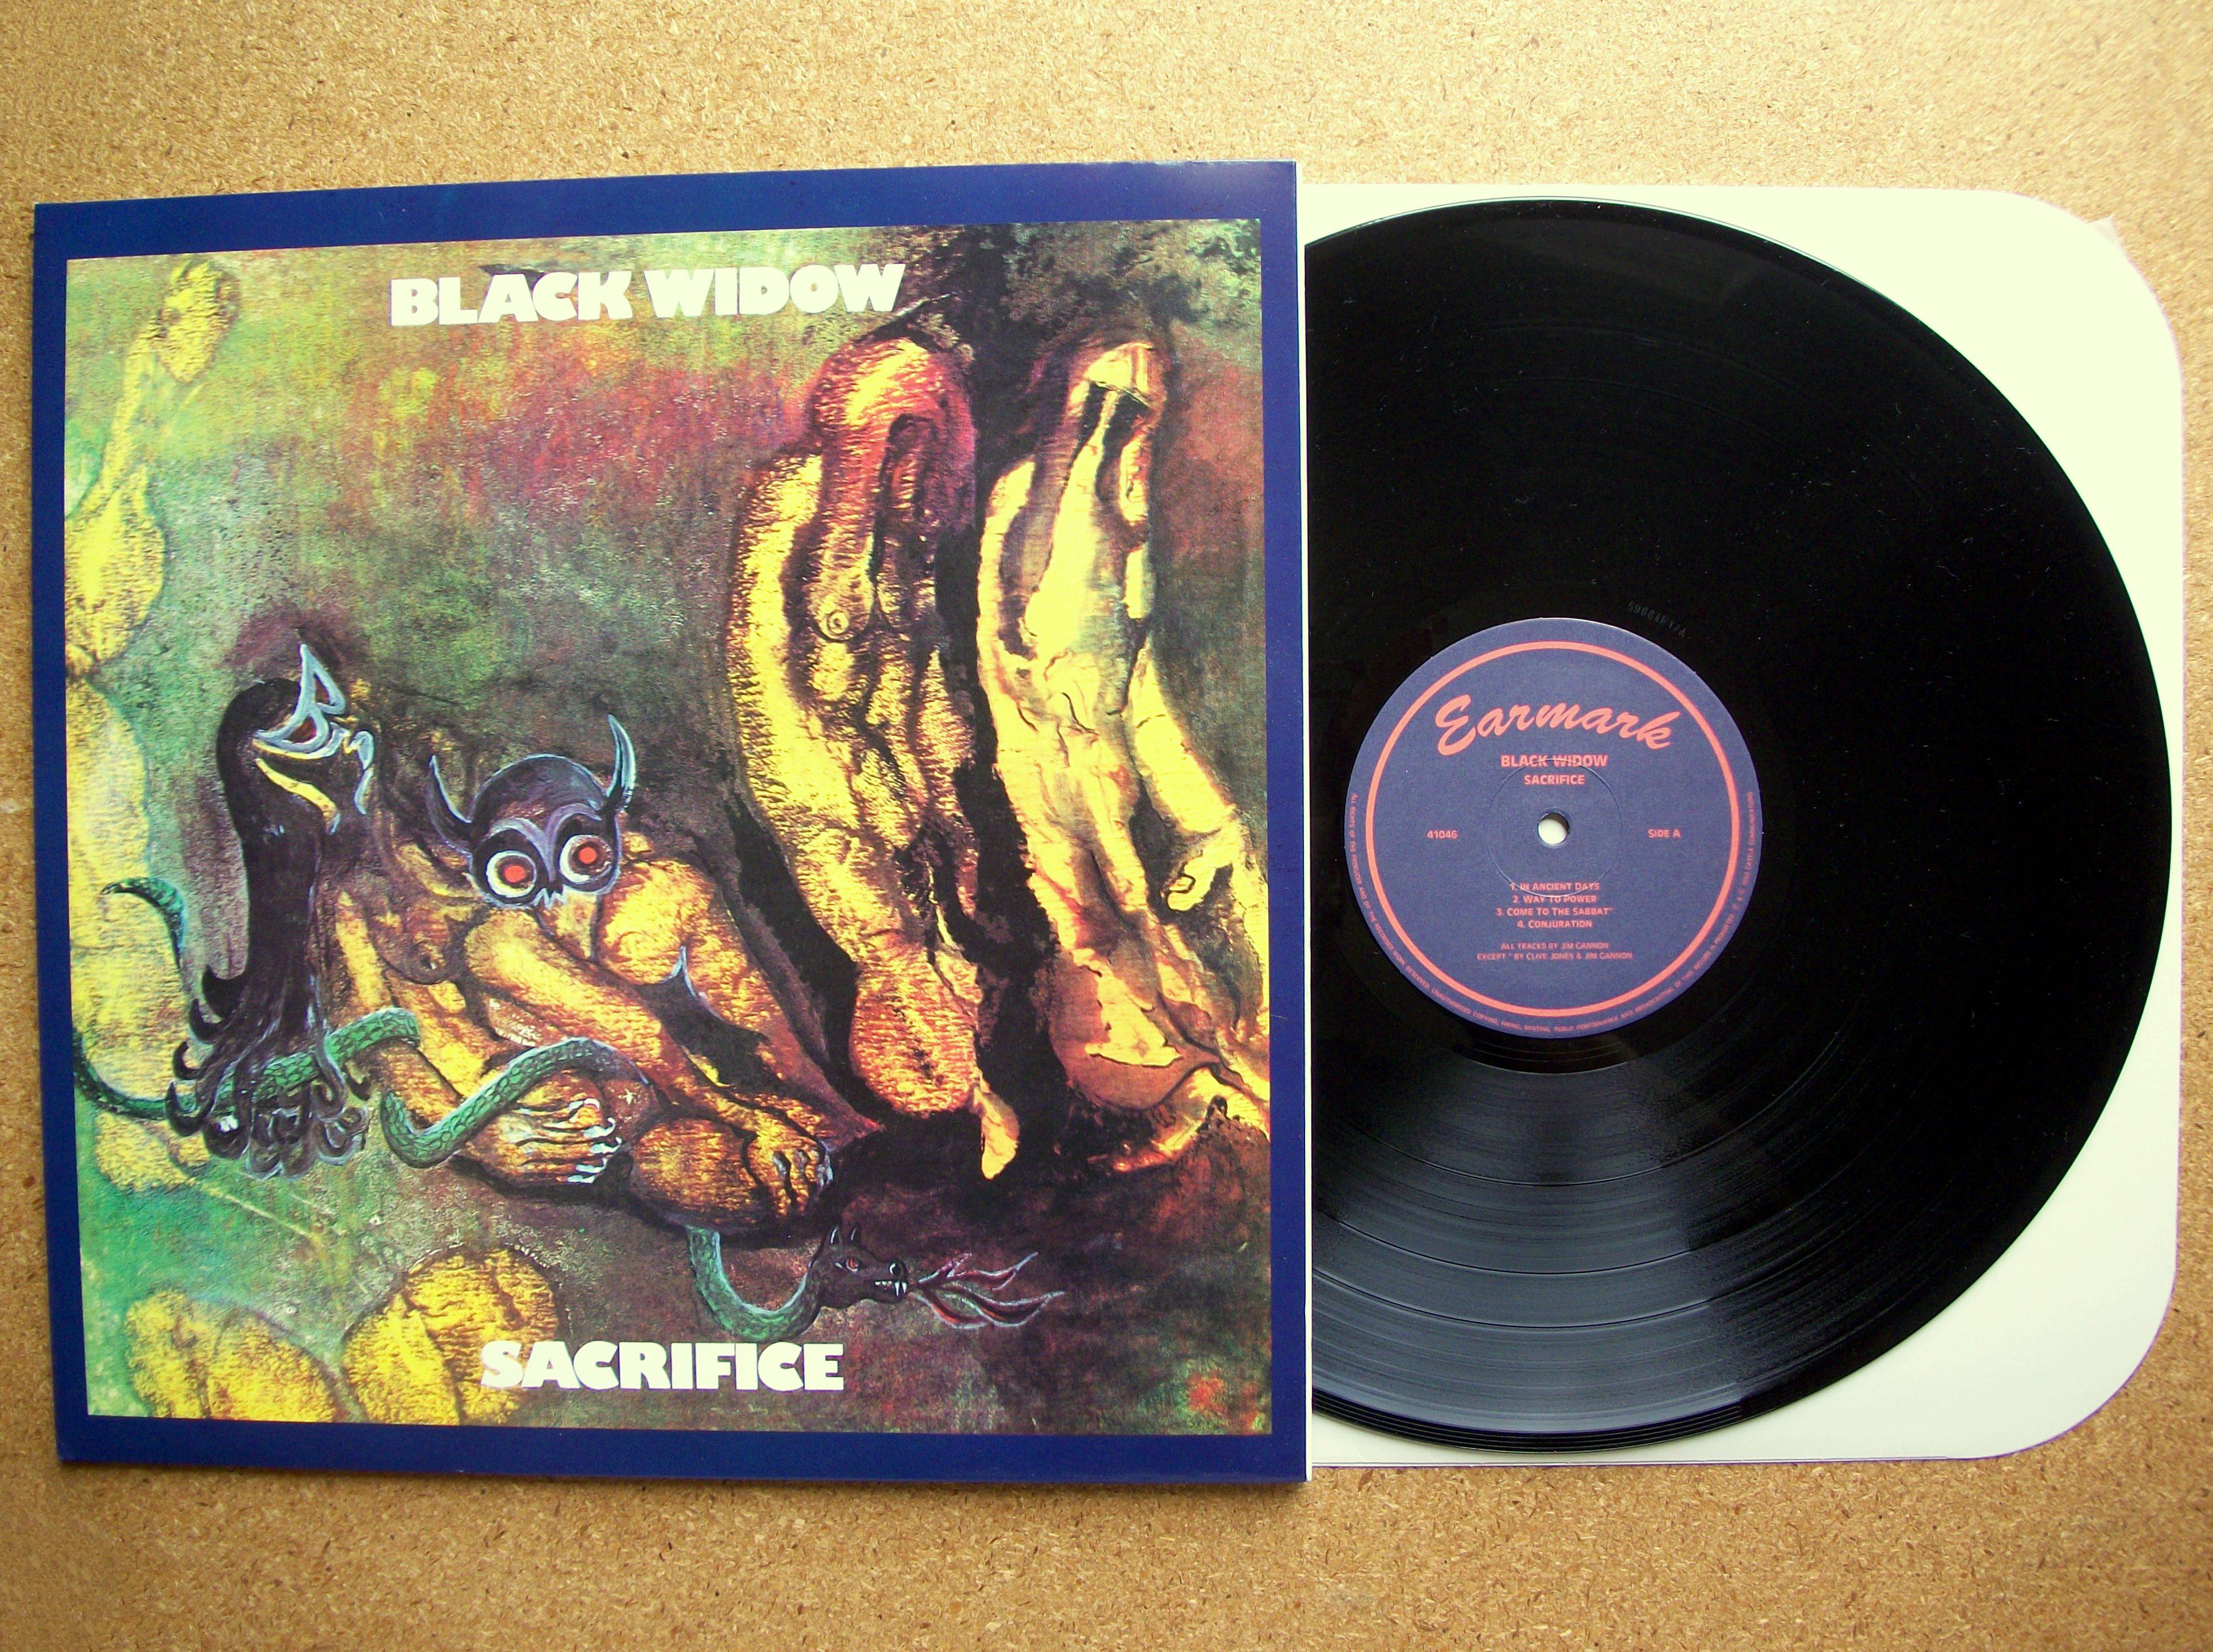 Группа вдова. Black Widow Sacrifice 1970. Sacrifice Black Widow. Black Widow album. Black Widow 1998 Return to the Sabbat.